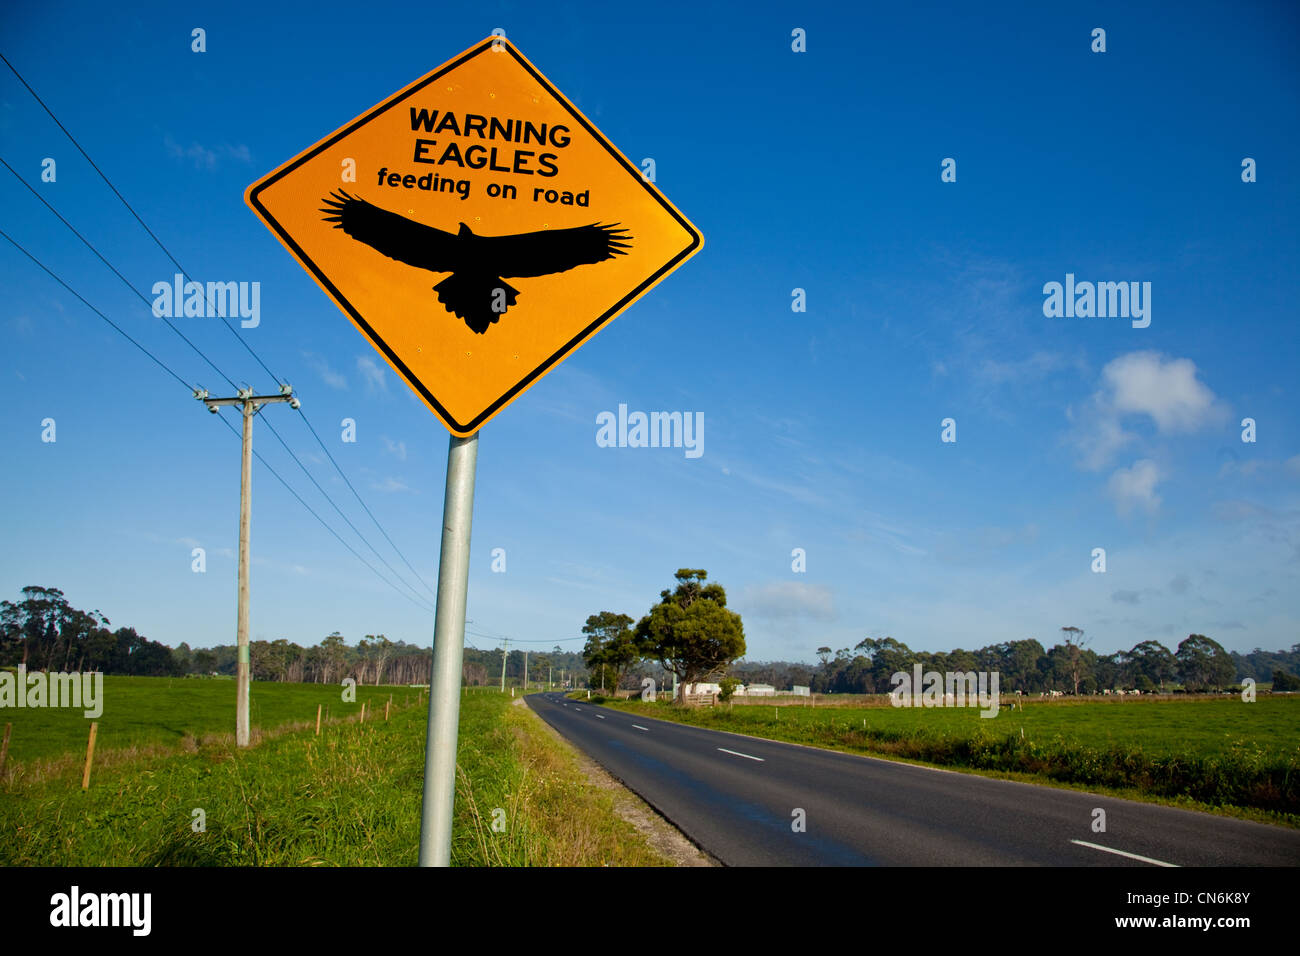 Eagles on road warning sign. Tasmania. Australia. Stock Photo